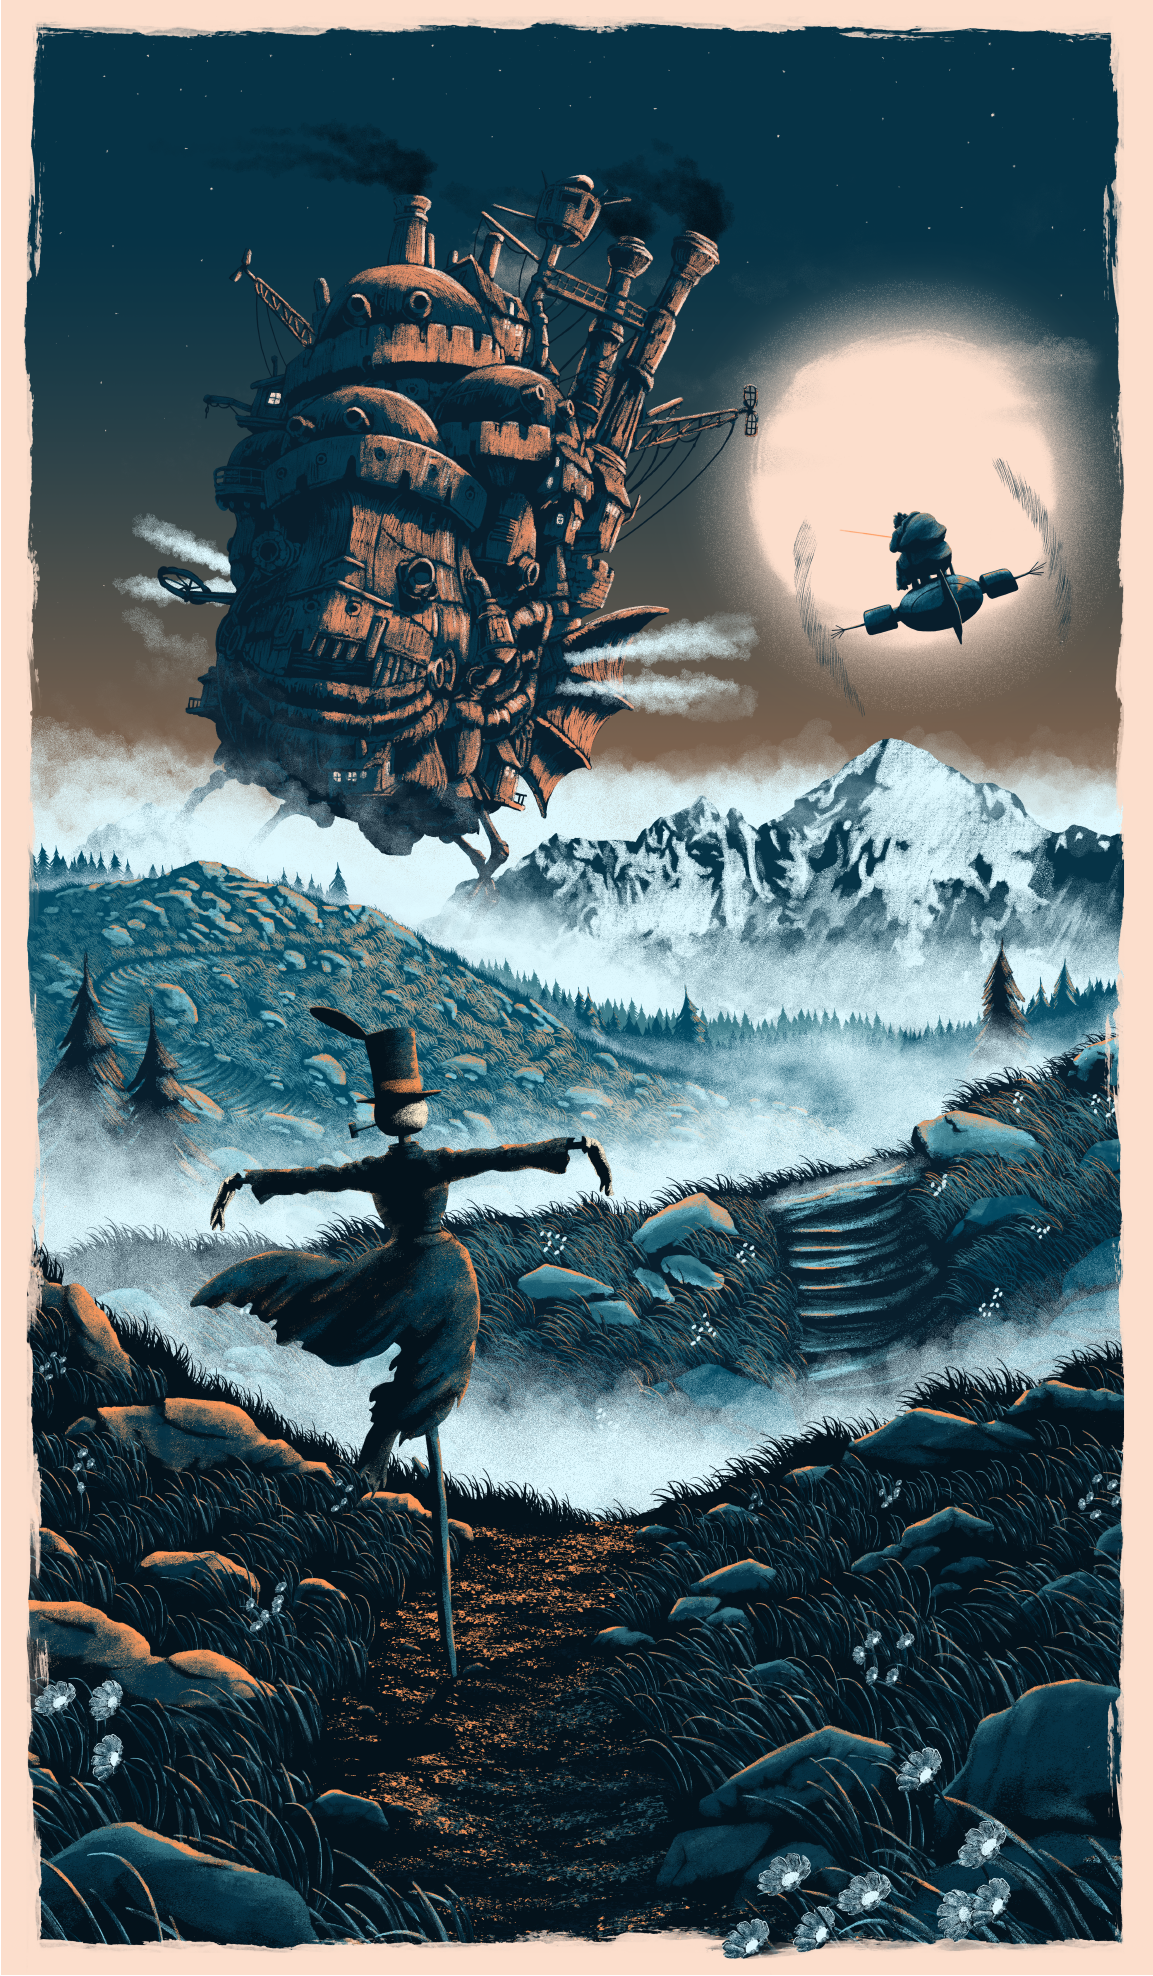 Bottle neck gallery poster ILLUSTRATION  howl's moving castle Studio Ghibli movie poster prints Landscape mountains fantasy